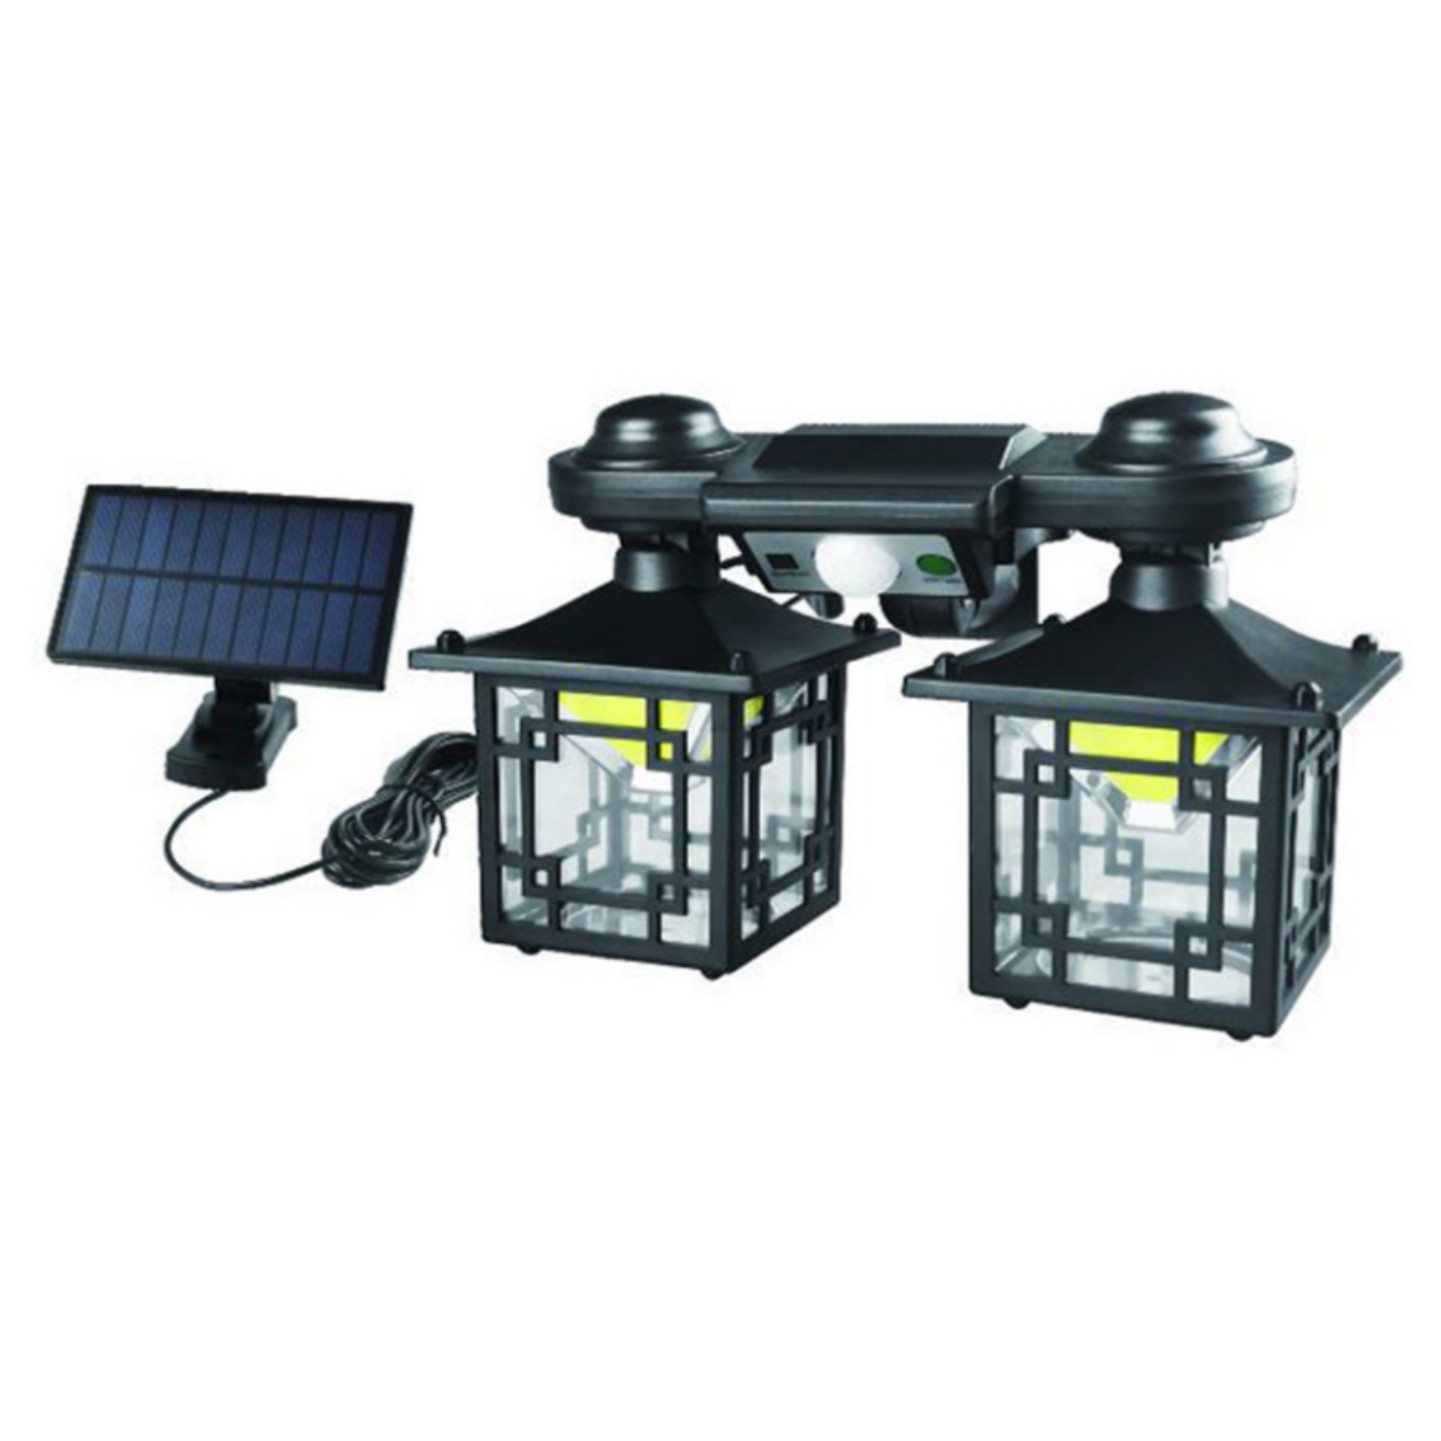 Solar Outdoor Lights 192COB Solar Powered Lights Waterproof Landscape Security Lamps For Yard Garden Driveway Pathway